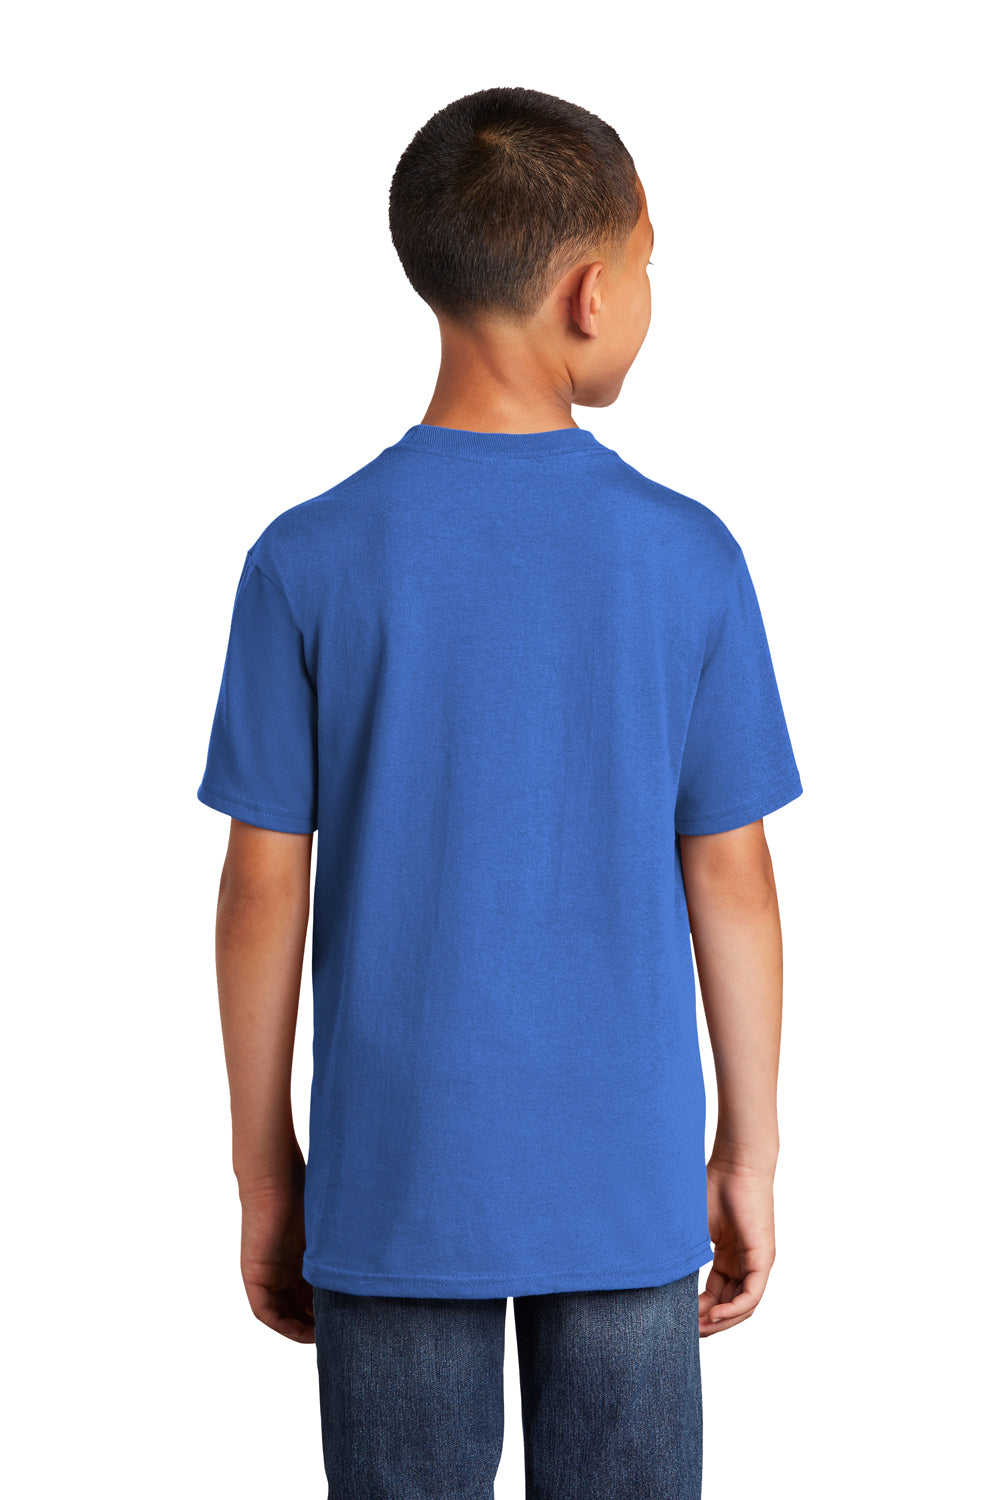 Port & Company PC54YDTG Core Cotton DTG Short Sleeve Crewneck T-Shirt Royal Blue Back